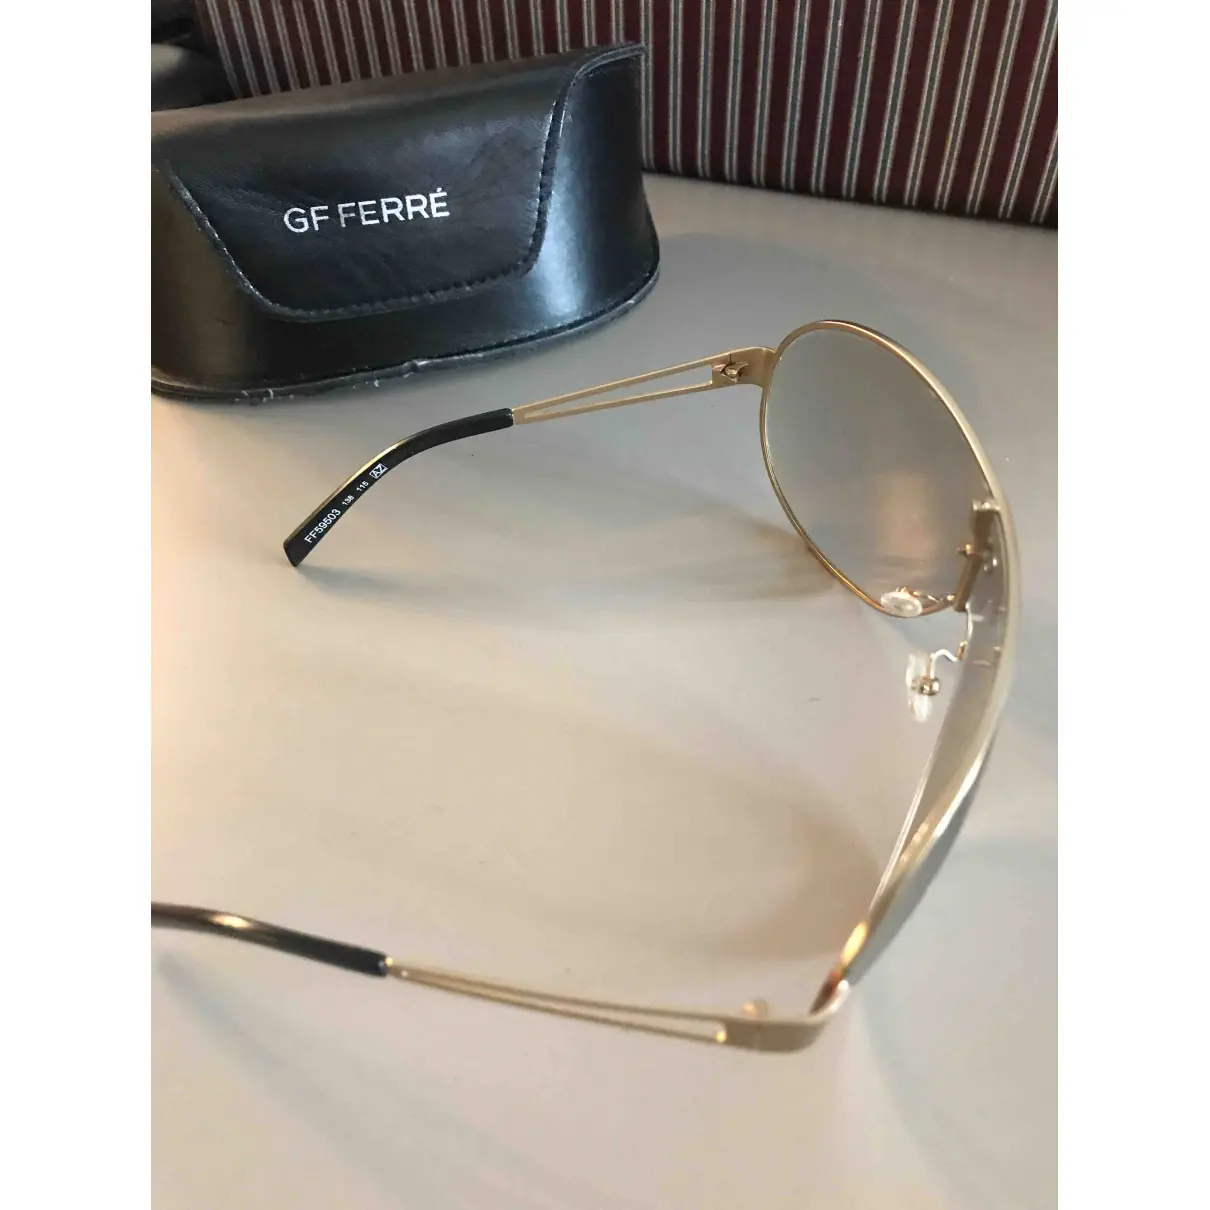 Buy Gianfranco Ferré Sunglasses online